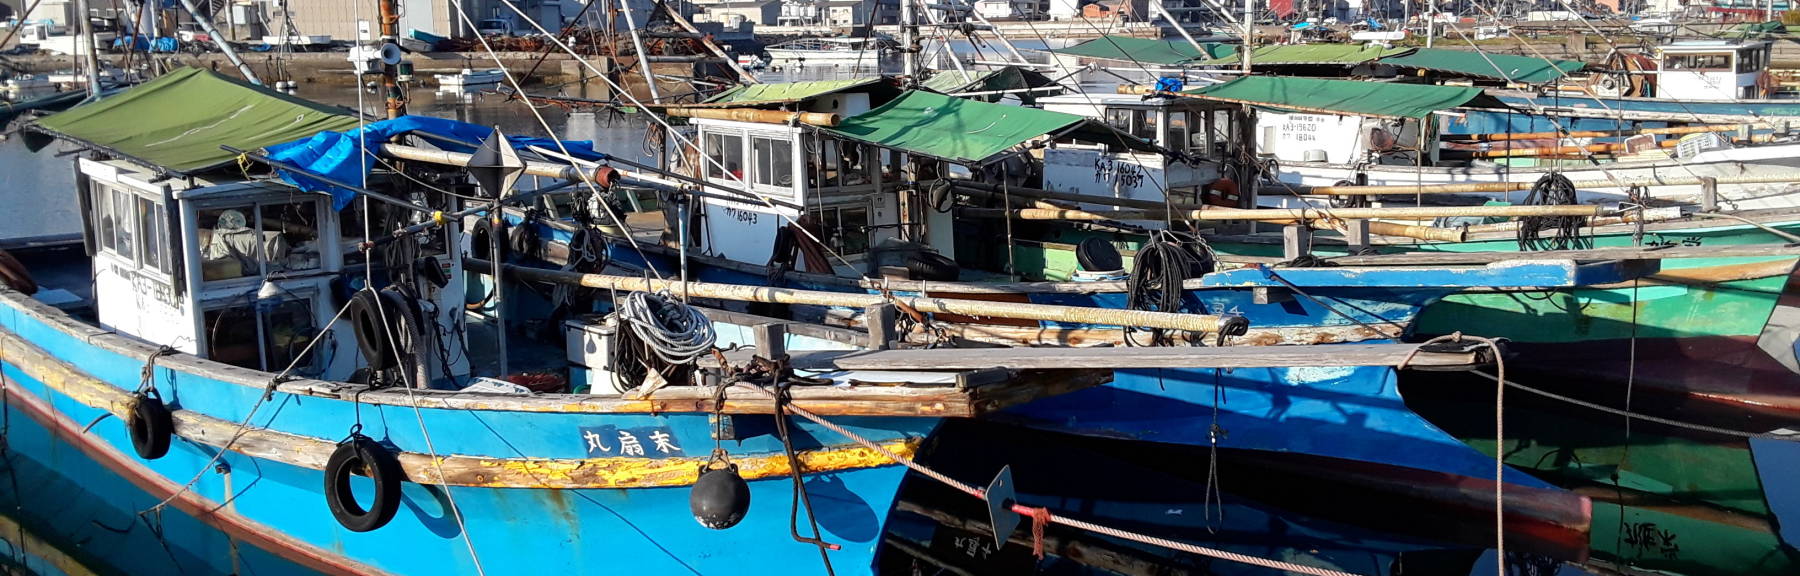 Fishing boats in the harbor at Takamatsu.